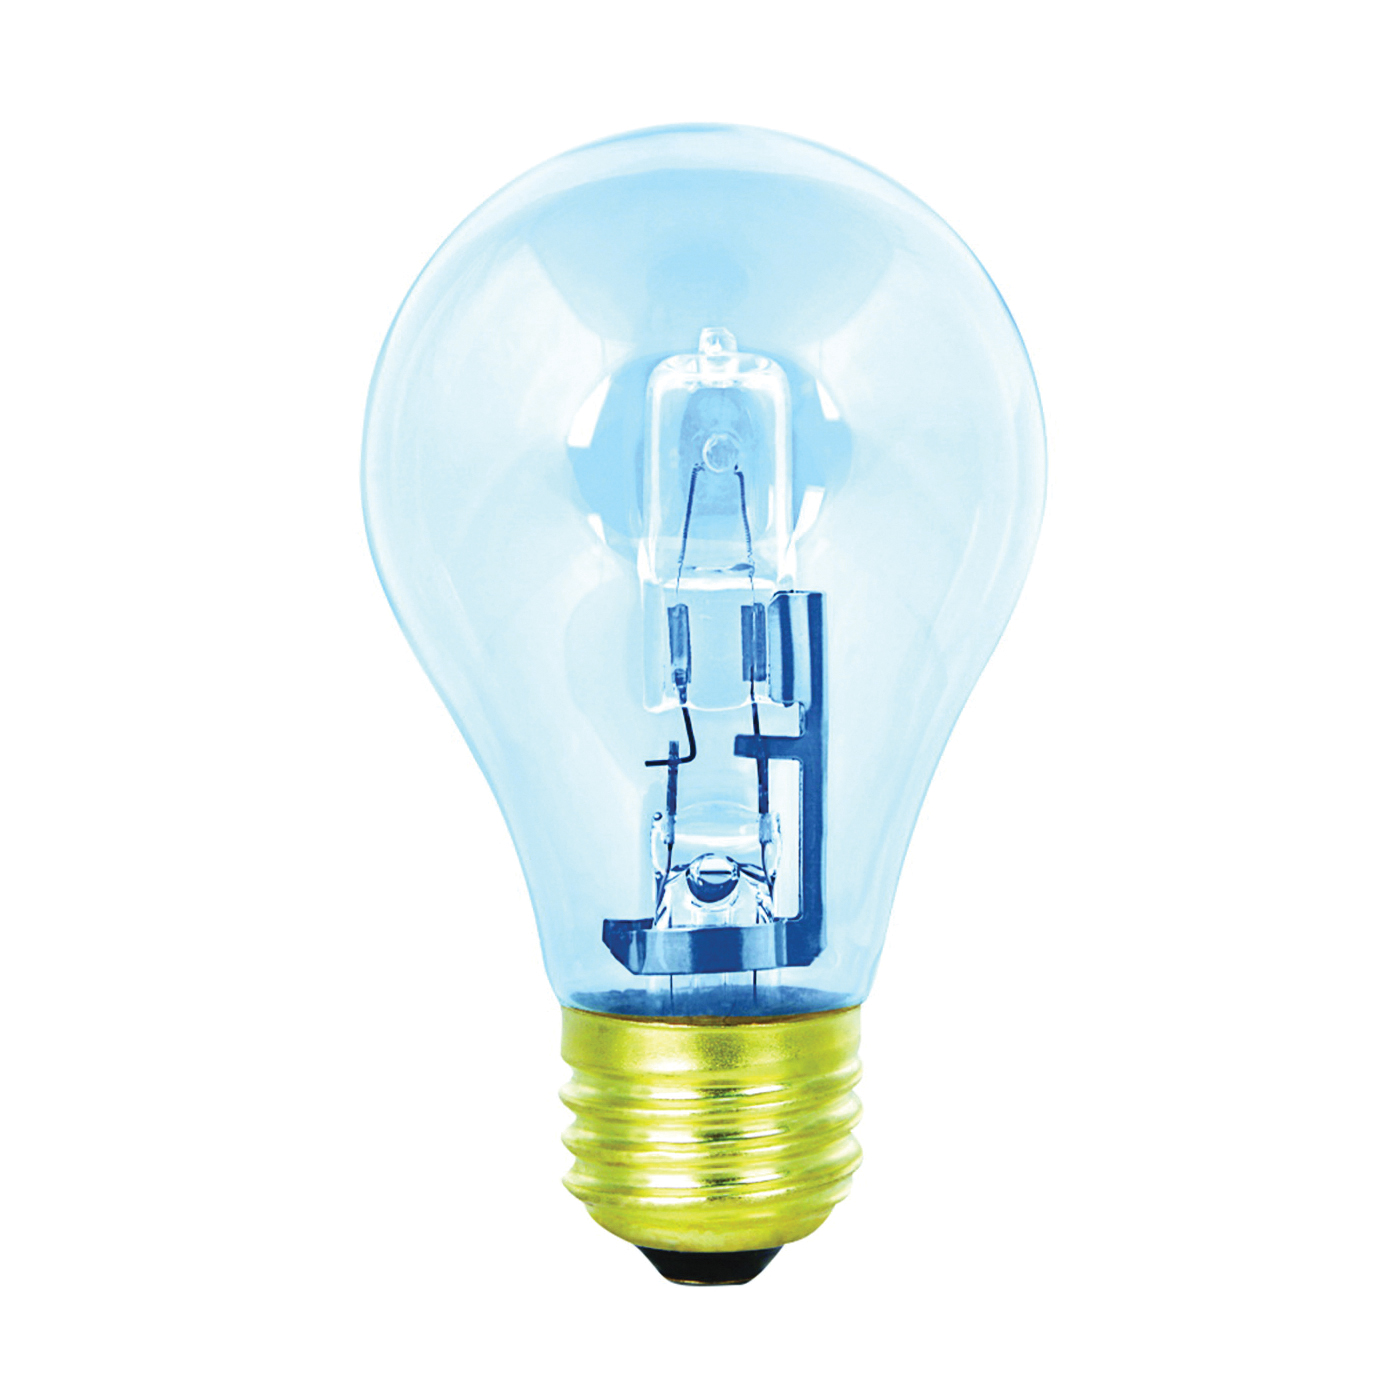 Q43A/CL/D/2 Halogen Bulb, 43 W, Medium E26 Lamp Base, A19 Lamp, Soft White Light, 565 Lumens